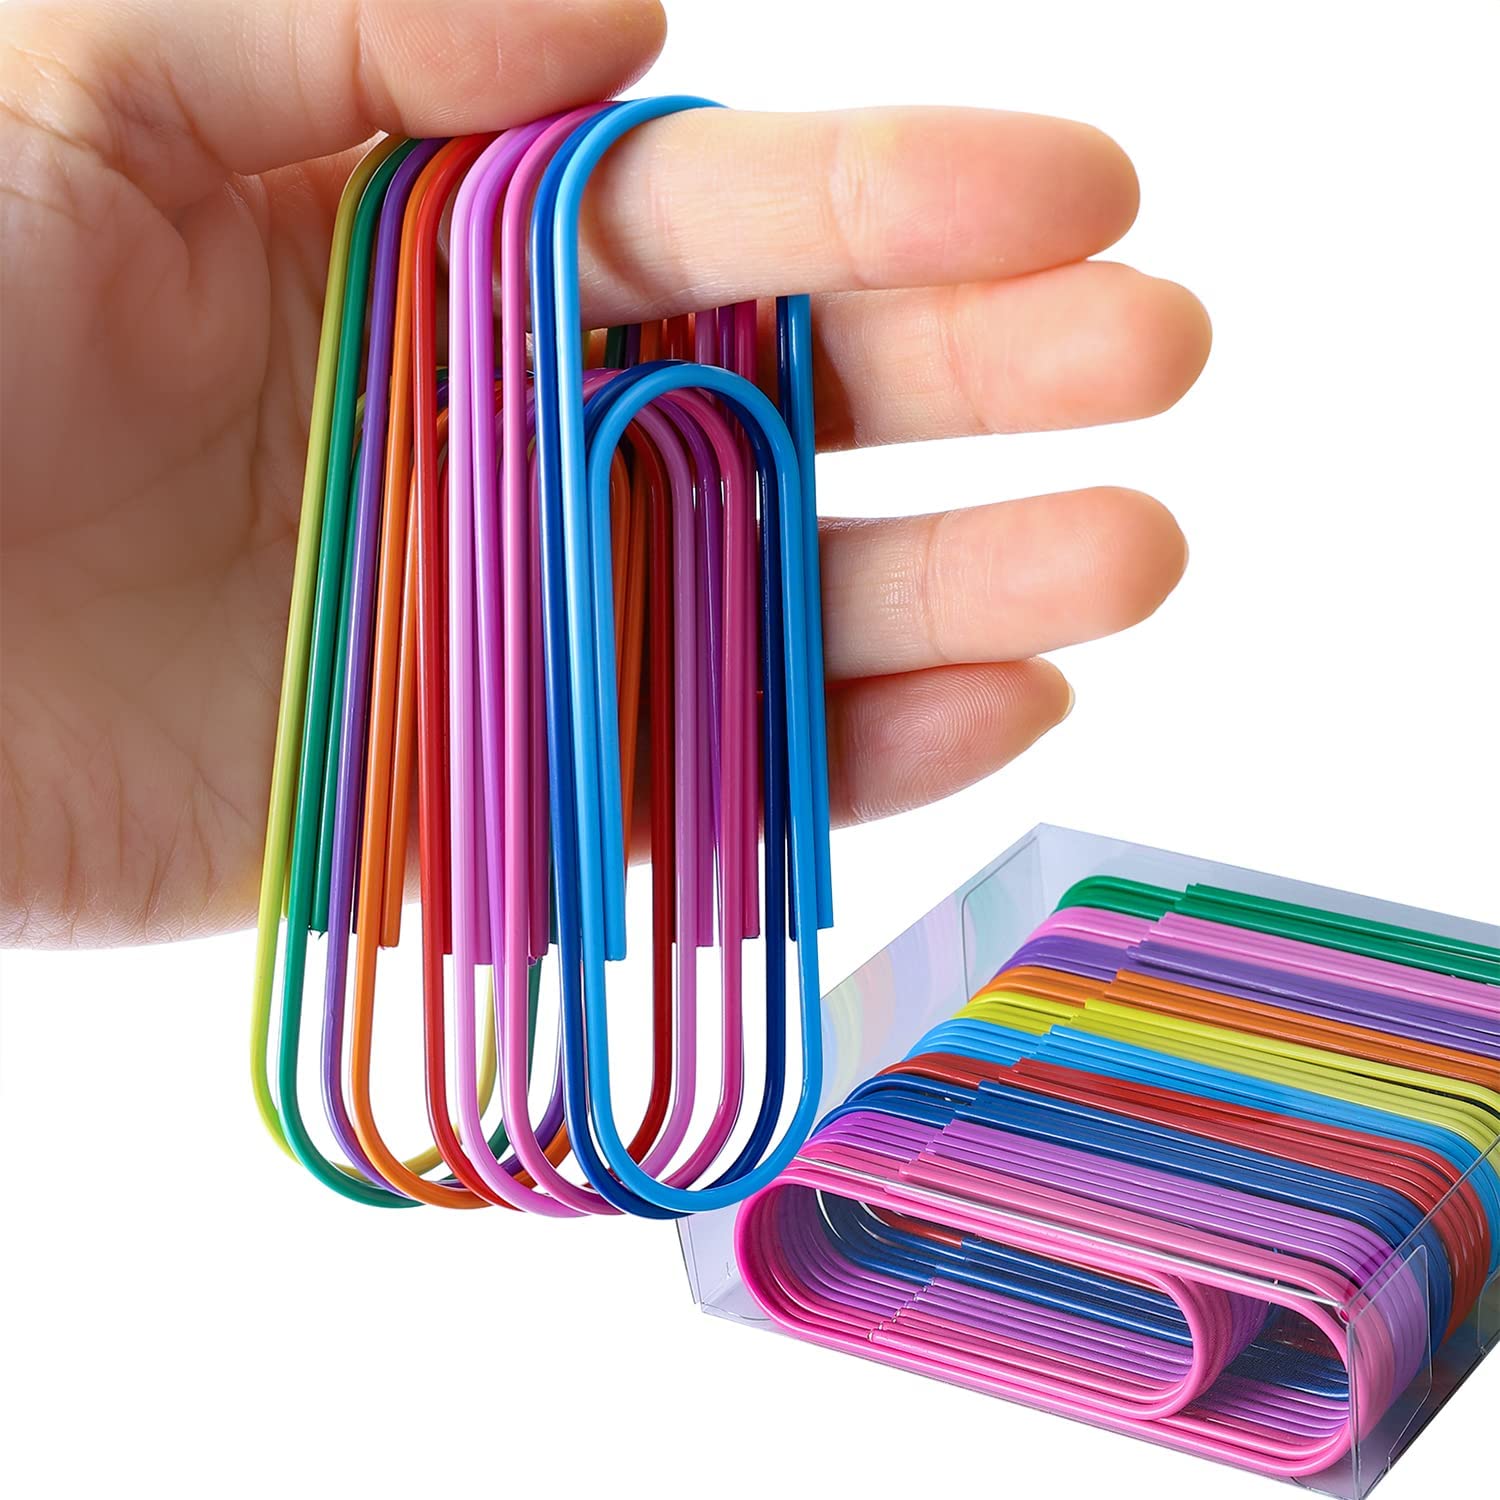 Cute school supplies giant paper clips